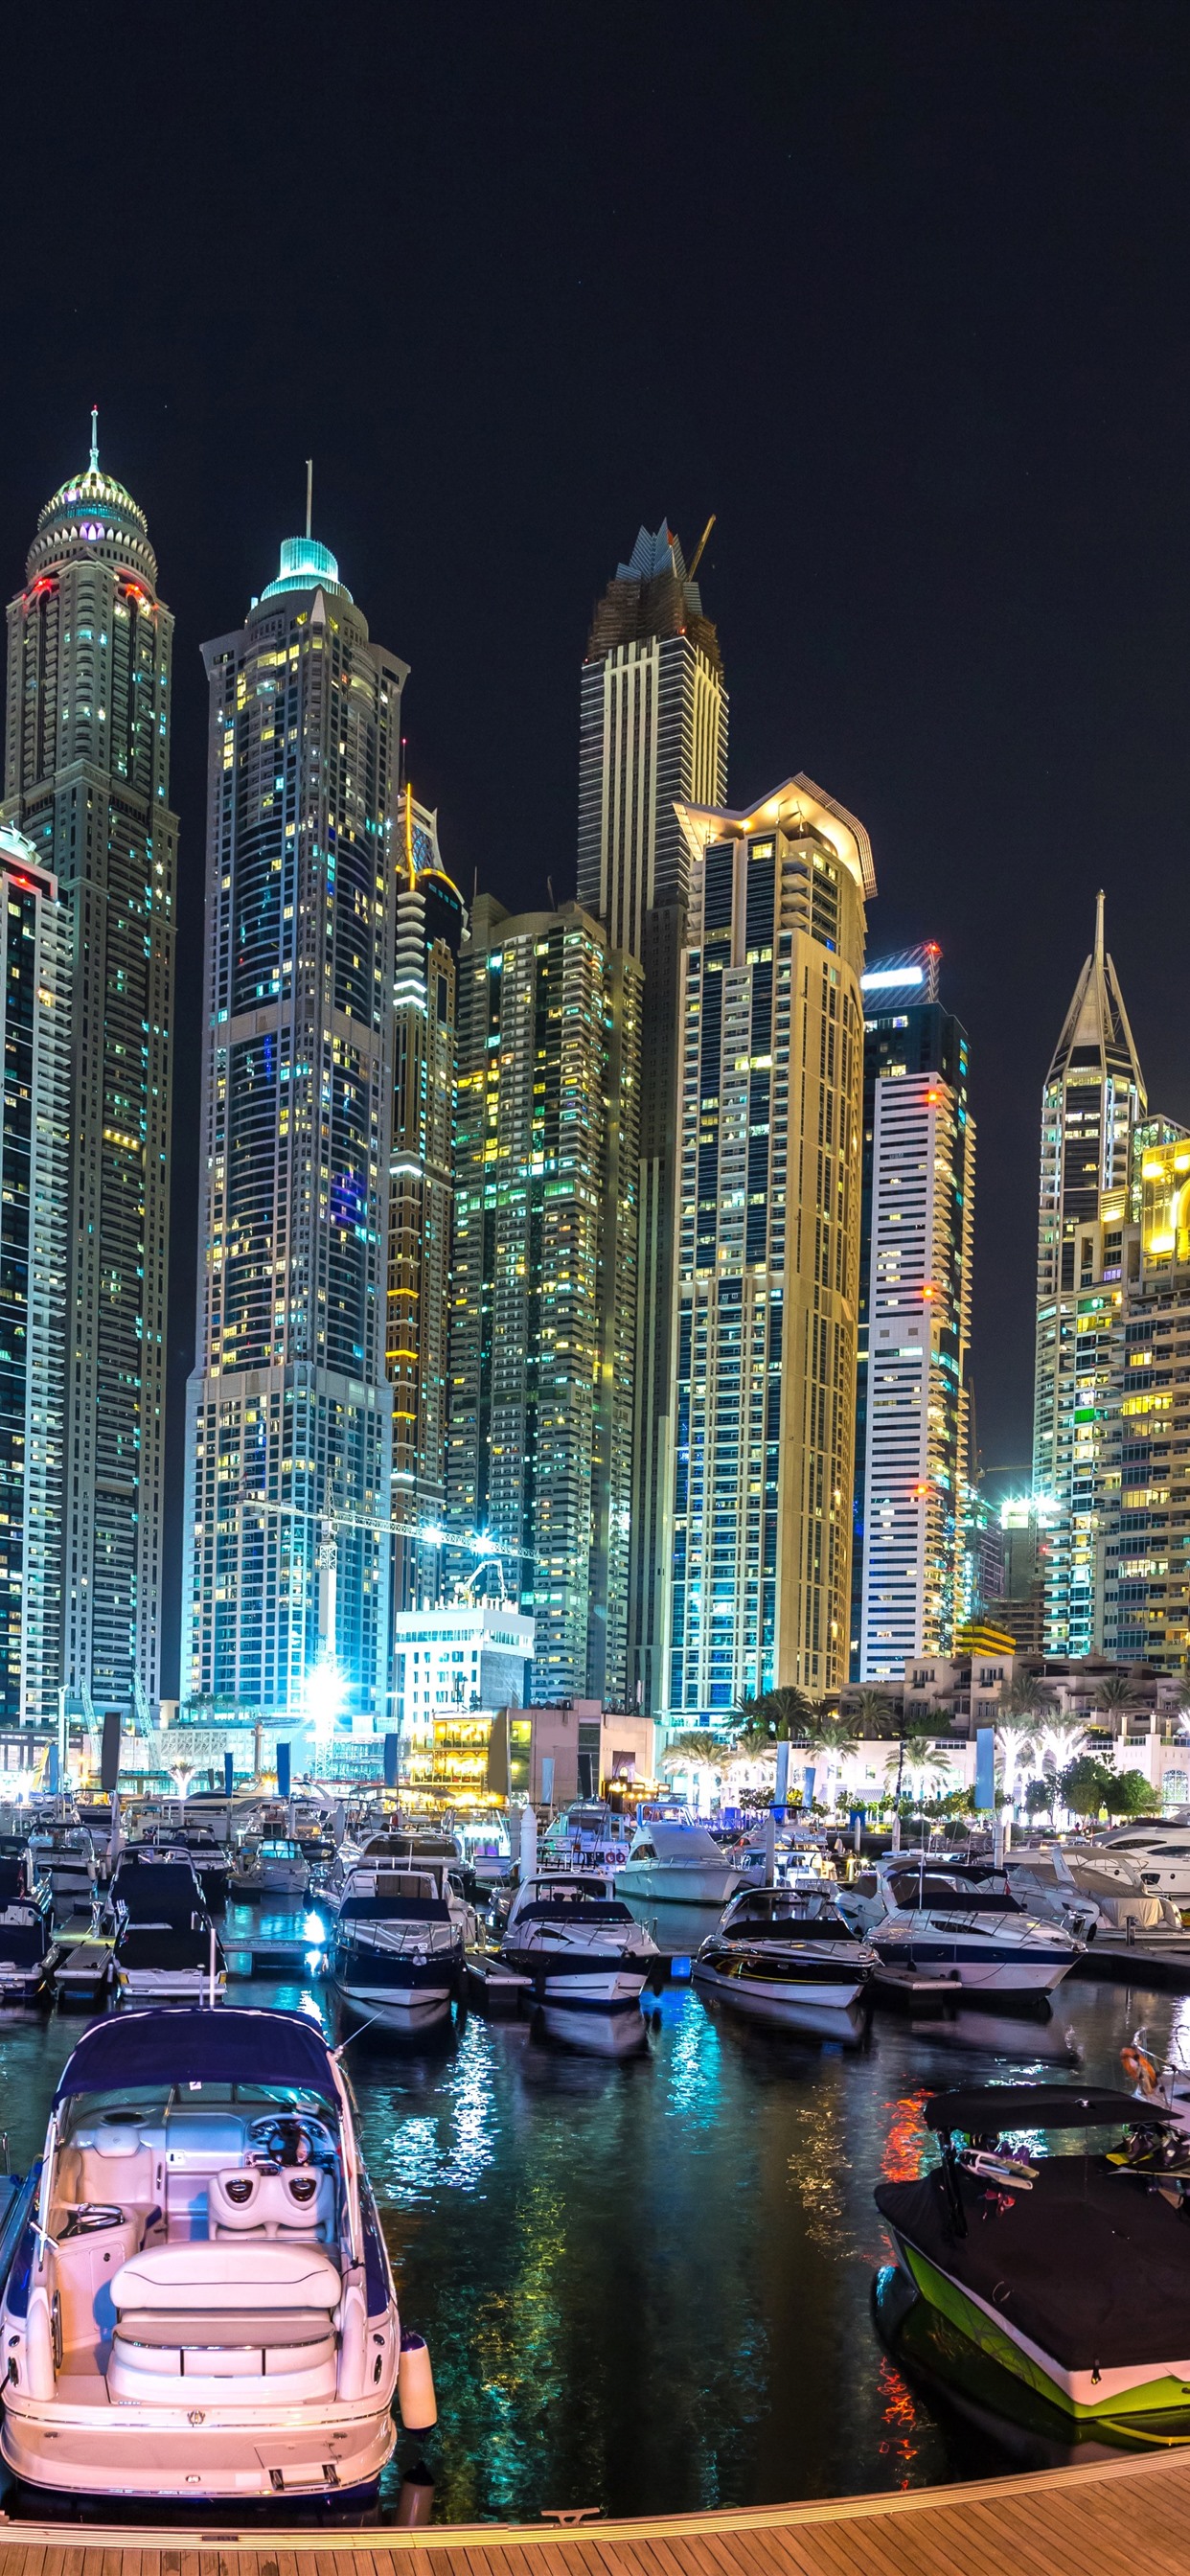 Dubai, Skyscrapers, City Night, Boats, Dock 1242x2688 IPhone 11 Pro XS Max Wallpaper, Background, Picture, Image